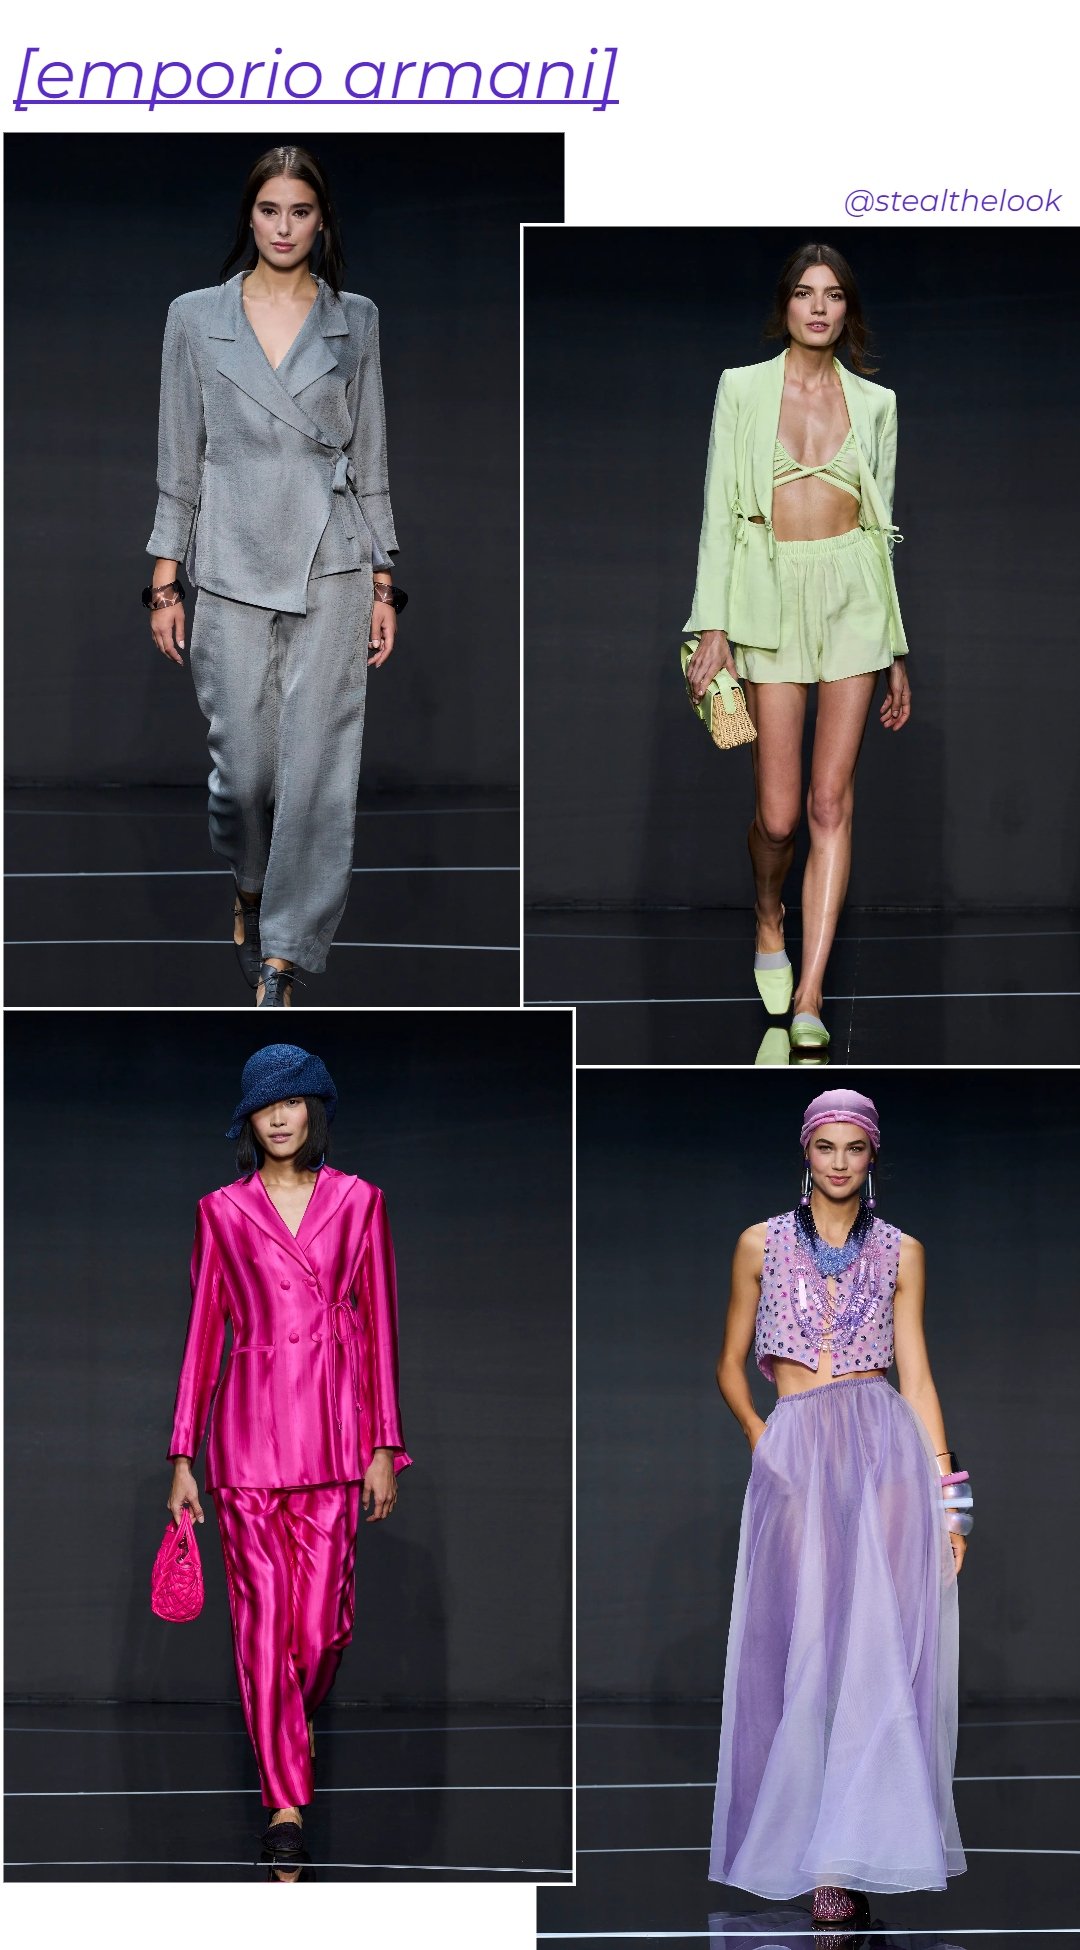 Emporio Armani - roupas diversas - Milano Fashion Week - primavera - colagem de imagens - https://stealthelook.com.br